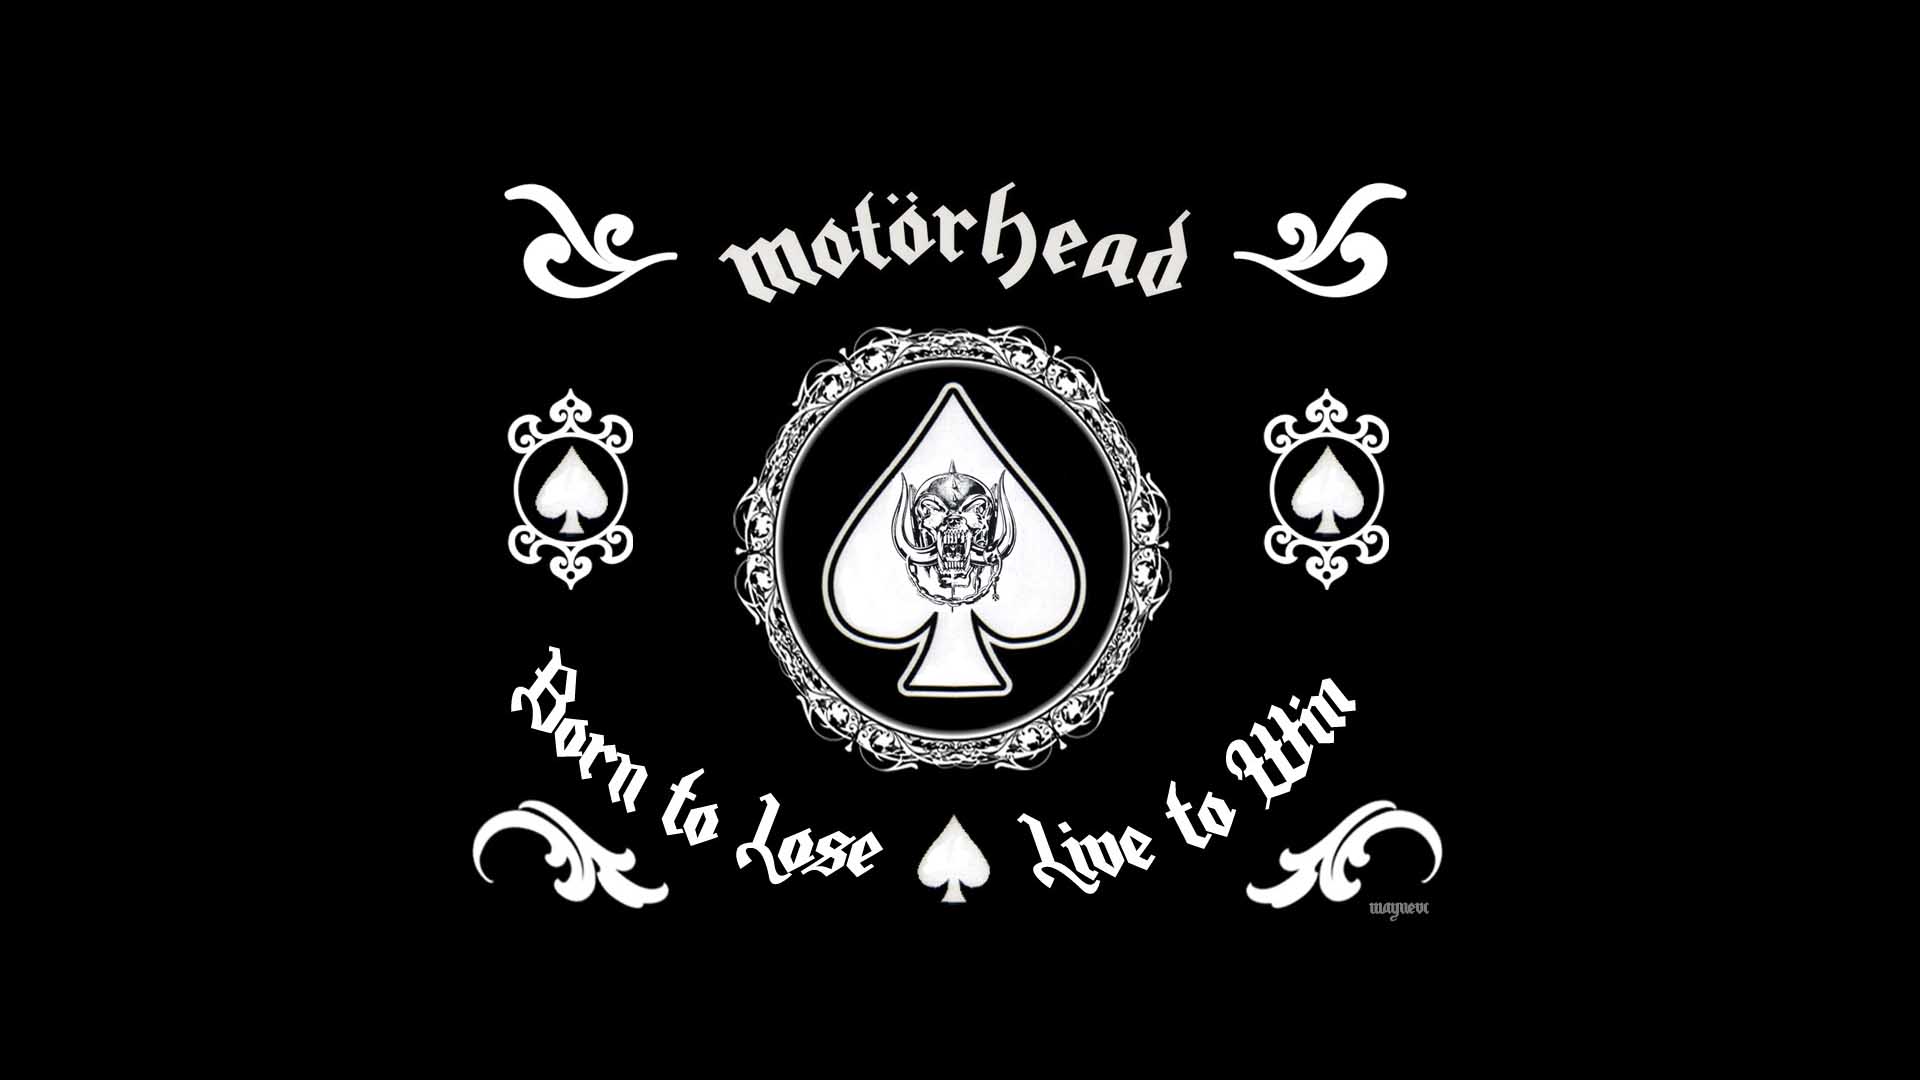 General 1920x1080 Motörhead Ace of Spades monochrome quote black black background